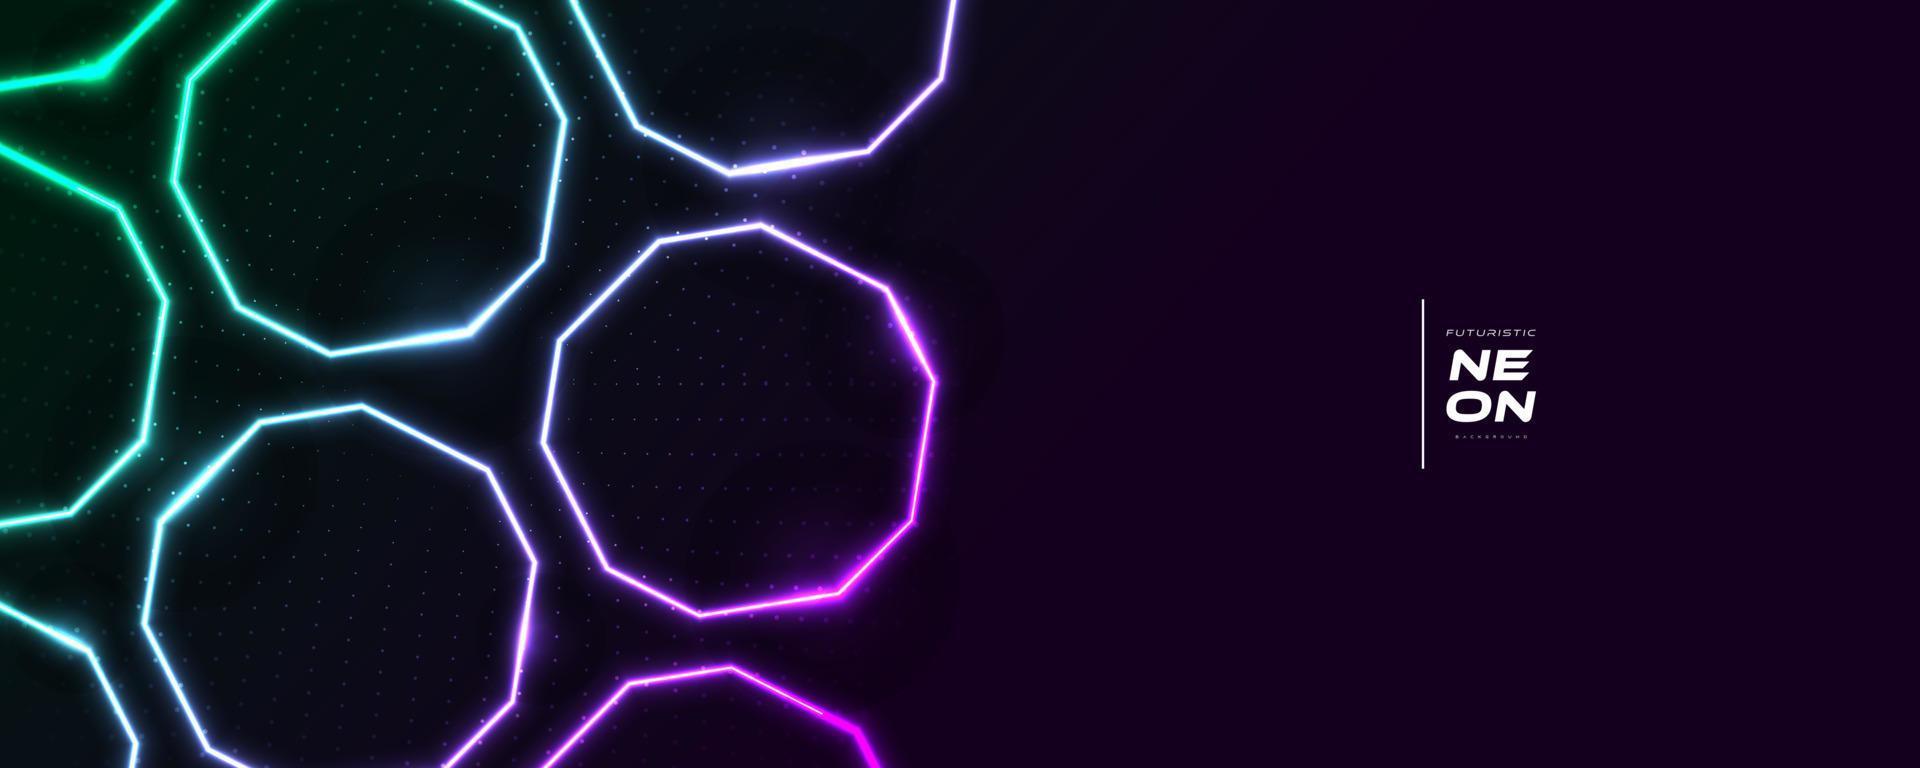 futuristische moderne sci-fi achtergrond met gloeiende neon cirkels op donkere achtergrond. abstracte kleurrijke neonlichtvormen op zwarte achtergrond vector